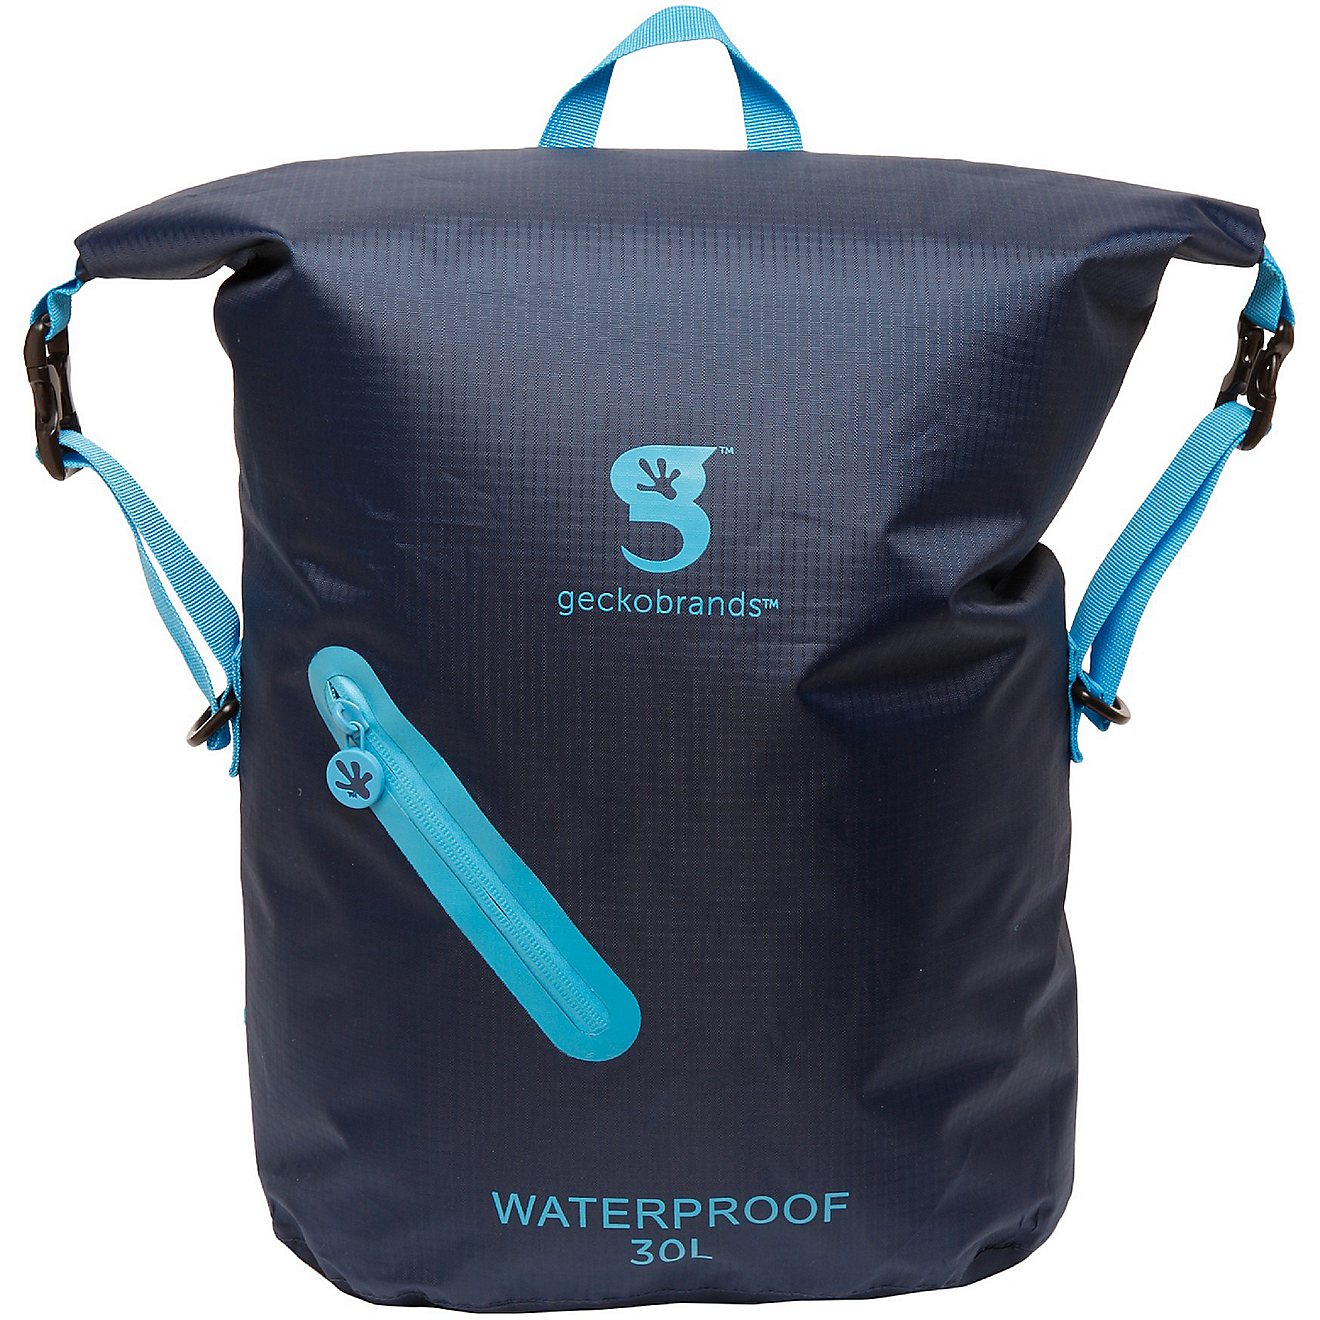 geckobrands Lightweight Waterproof 30L Backpack                                                                                  - view number 1